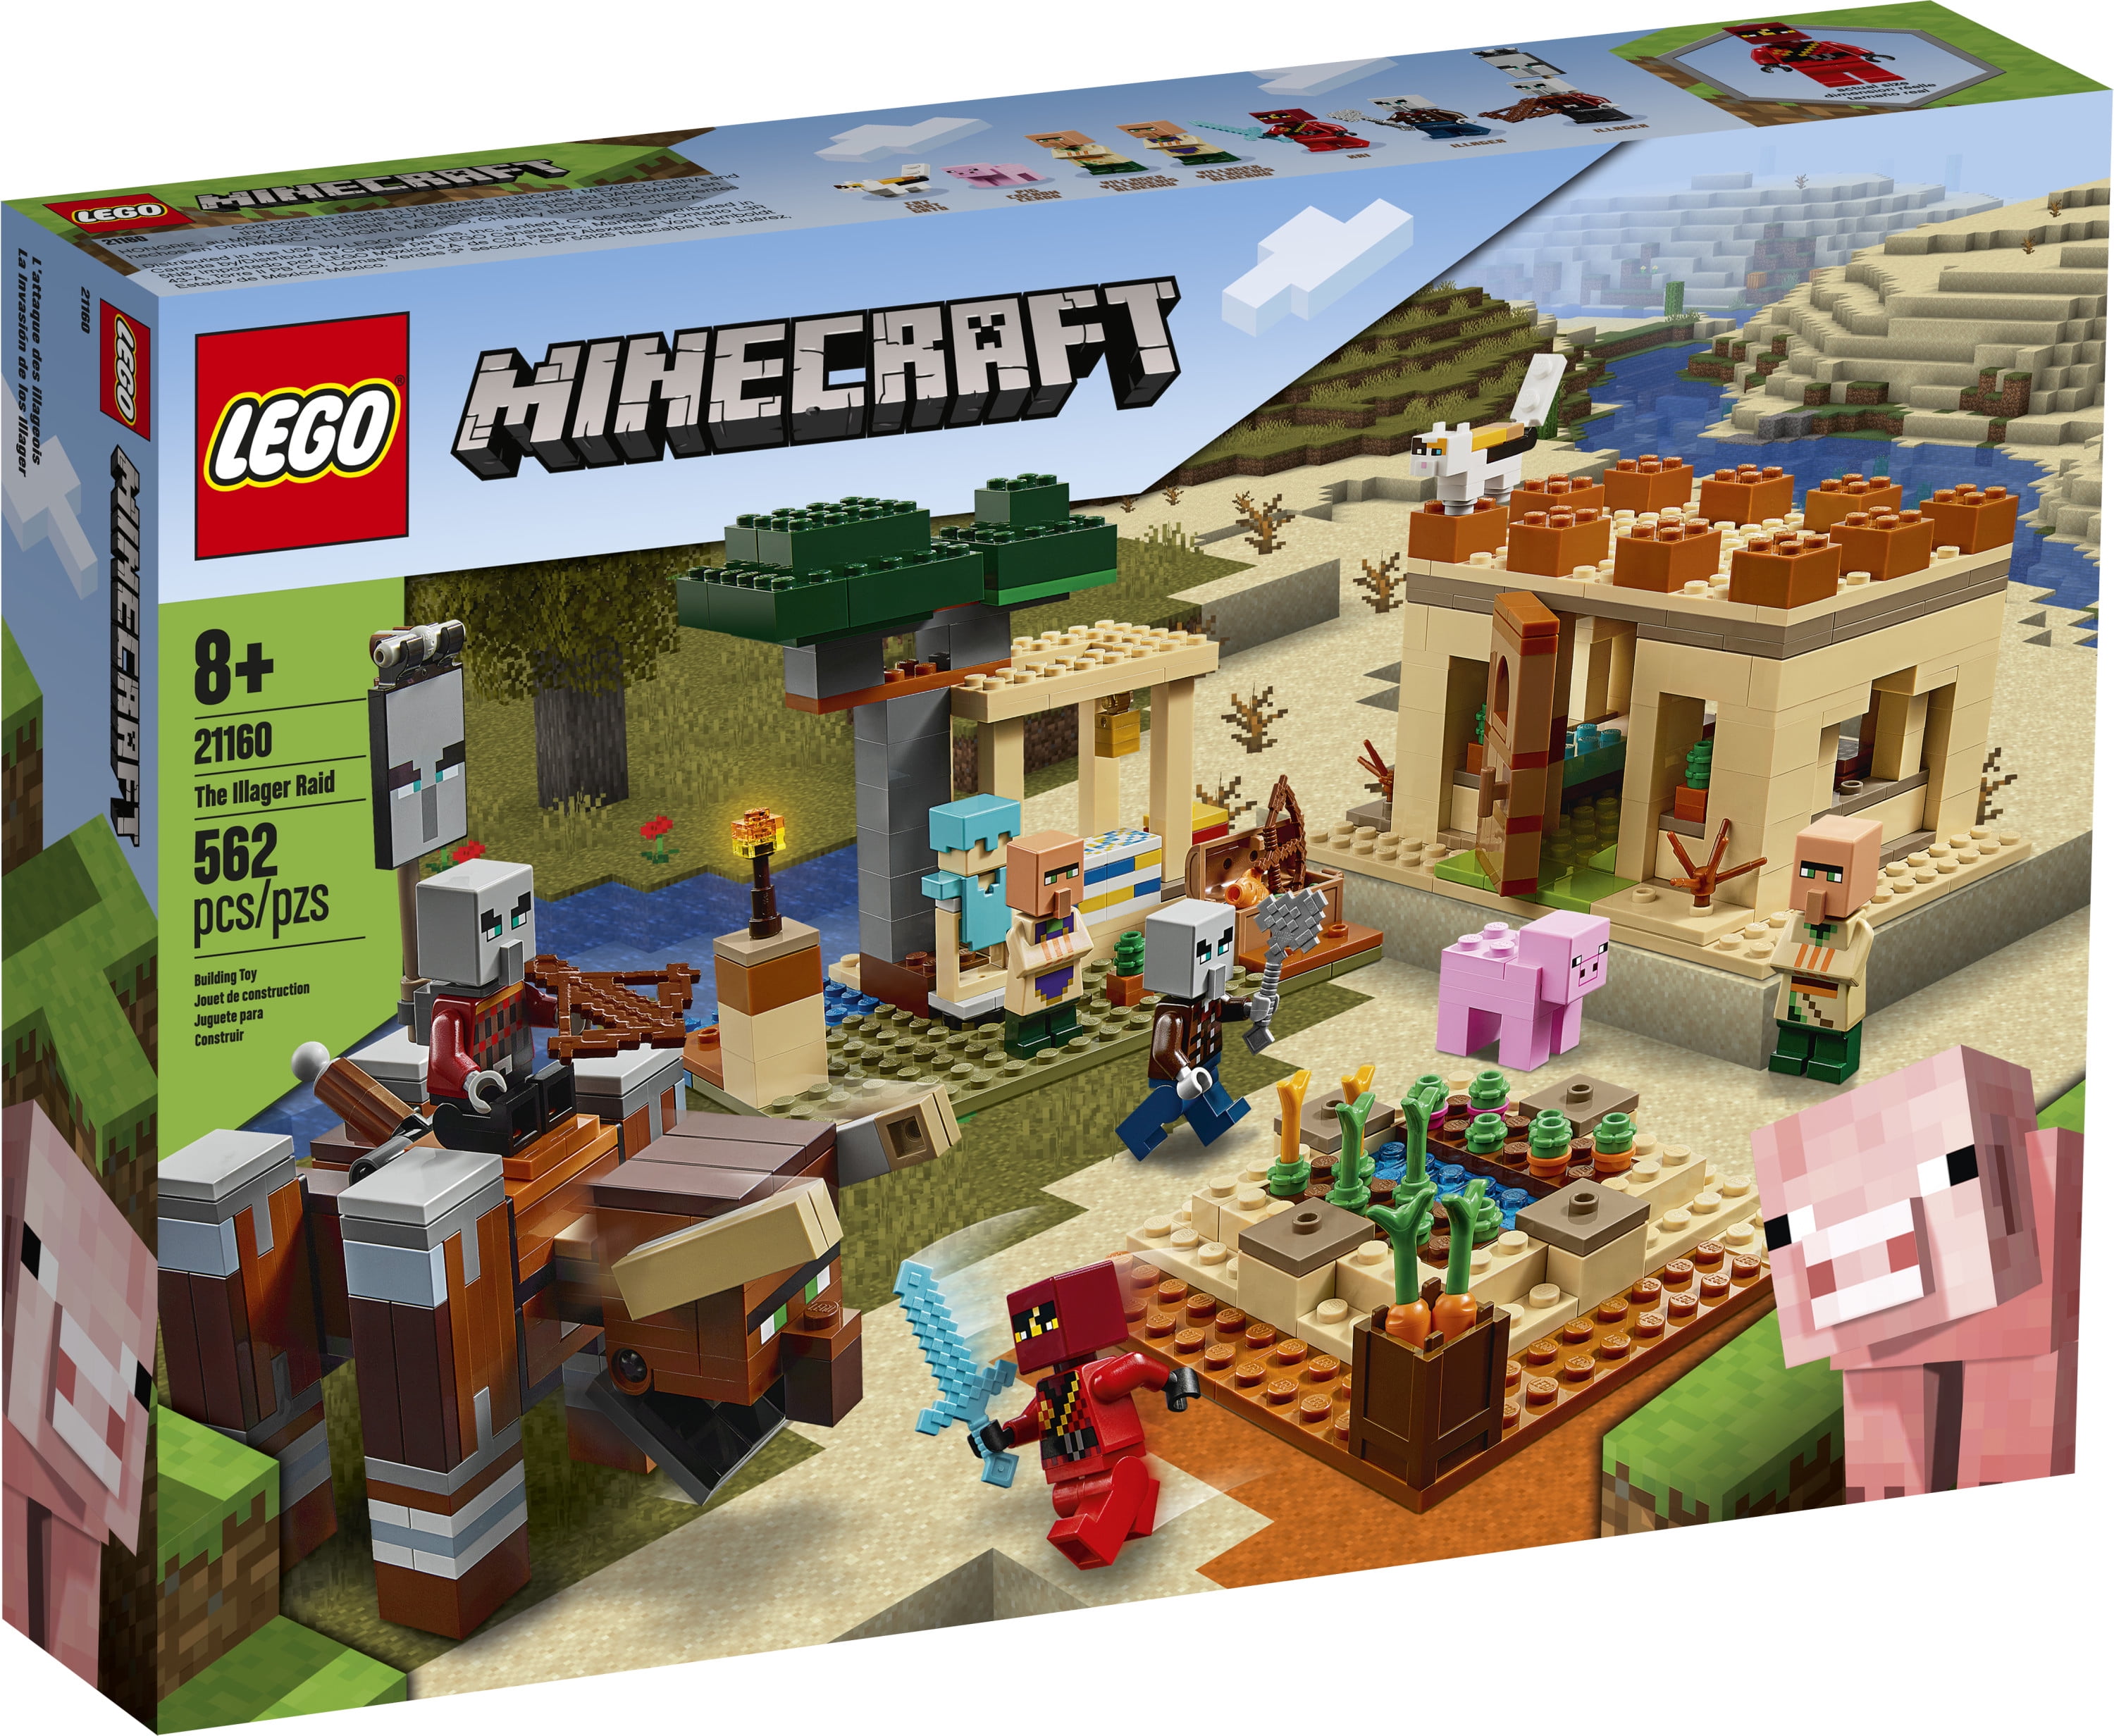 Lego Minecraft The Illager Raid Action Building Toy Set For Kids 562 Pieces Walmart Com Walmart Com